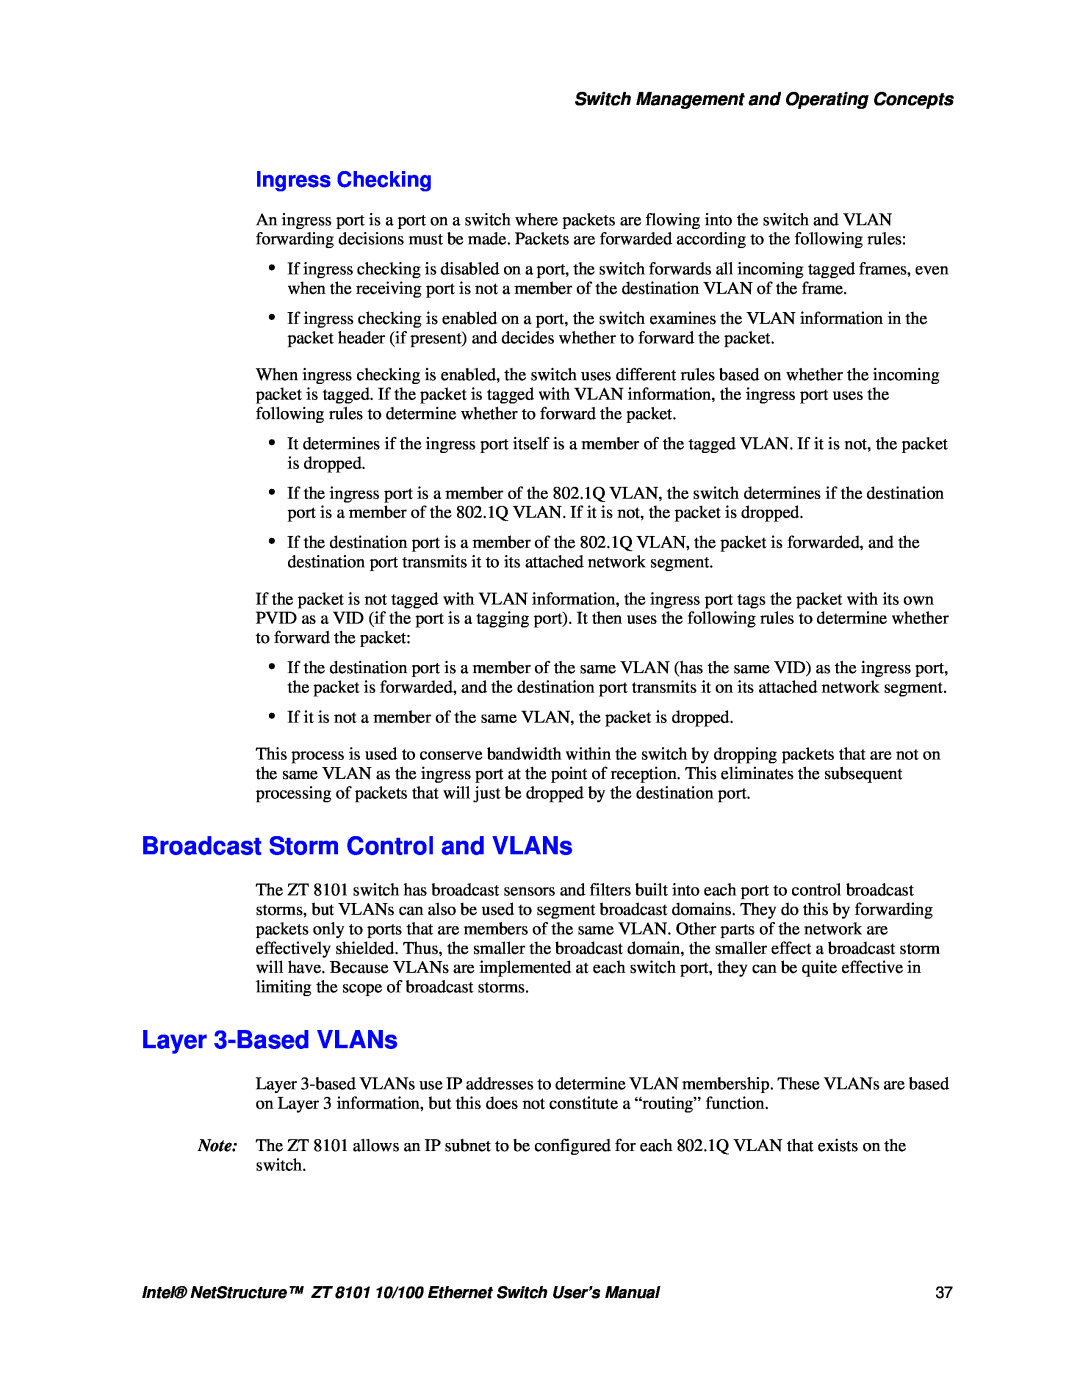 Intel ZT 8101 10/100 user manual Broadcast Storm Control and VLANs, Layer 3-BasedVLANs, Ingress Checking 